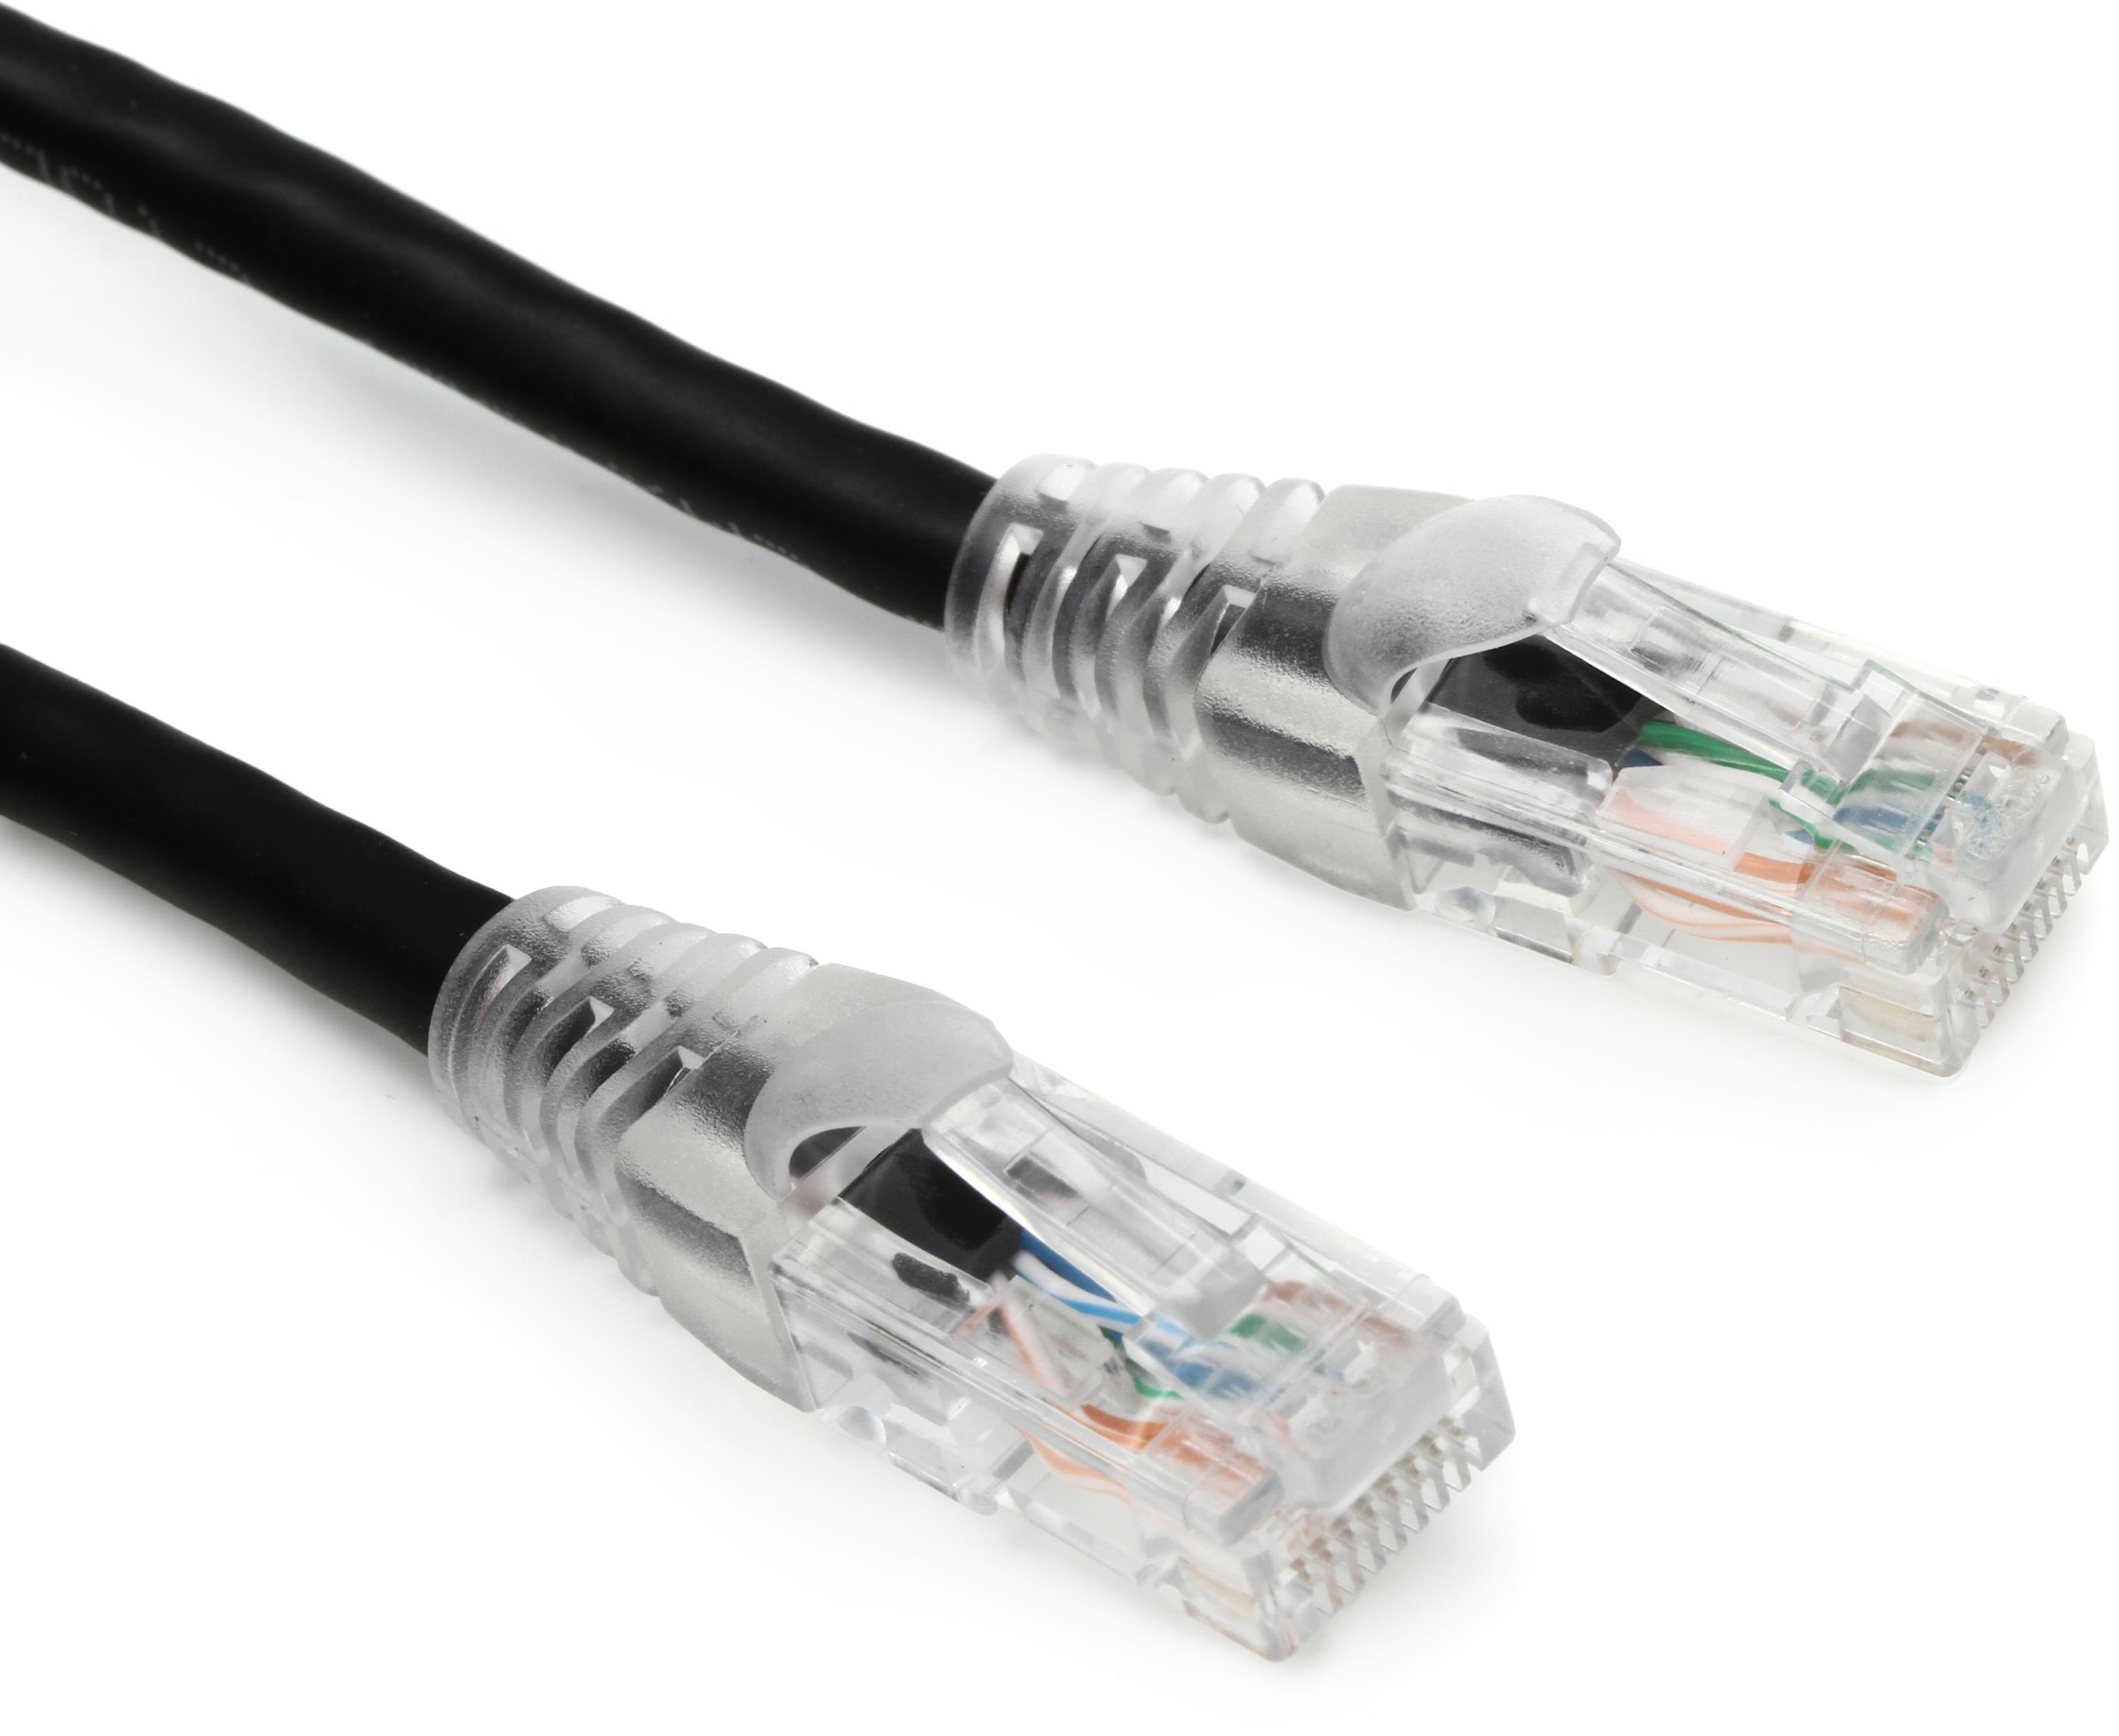 RCA Cat 5 Ethernet Cable, Blue, 25-ft